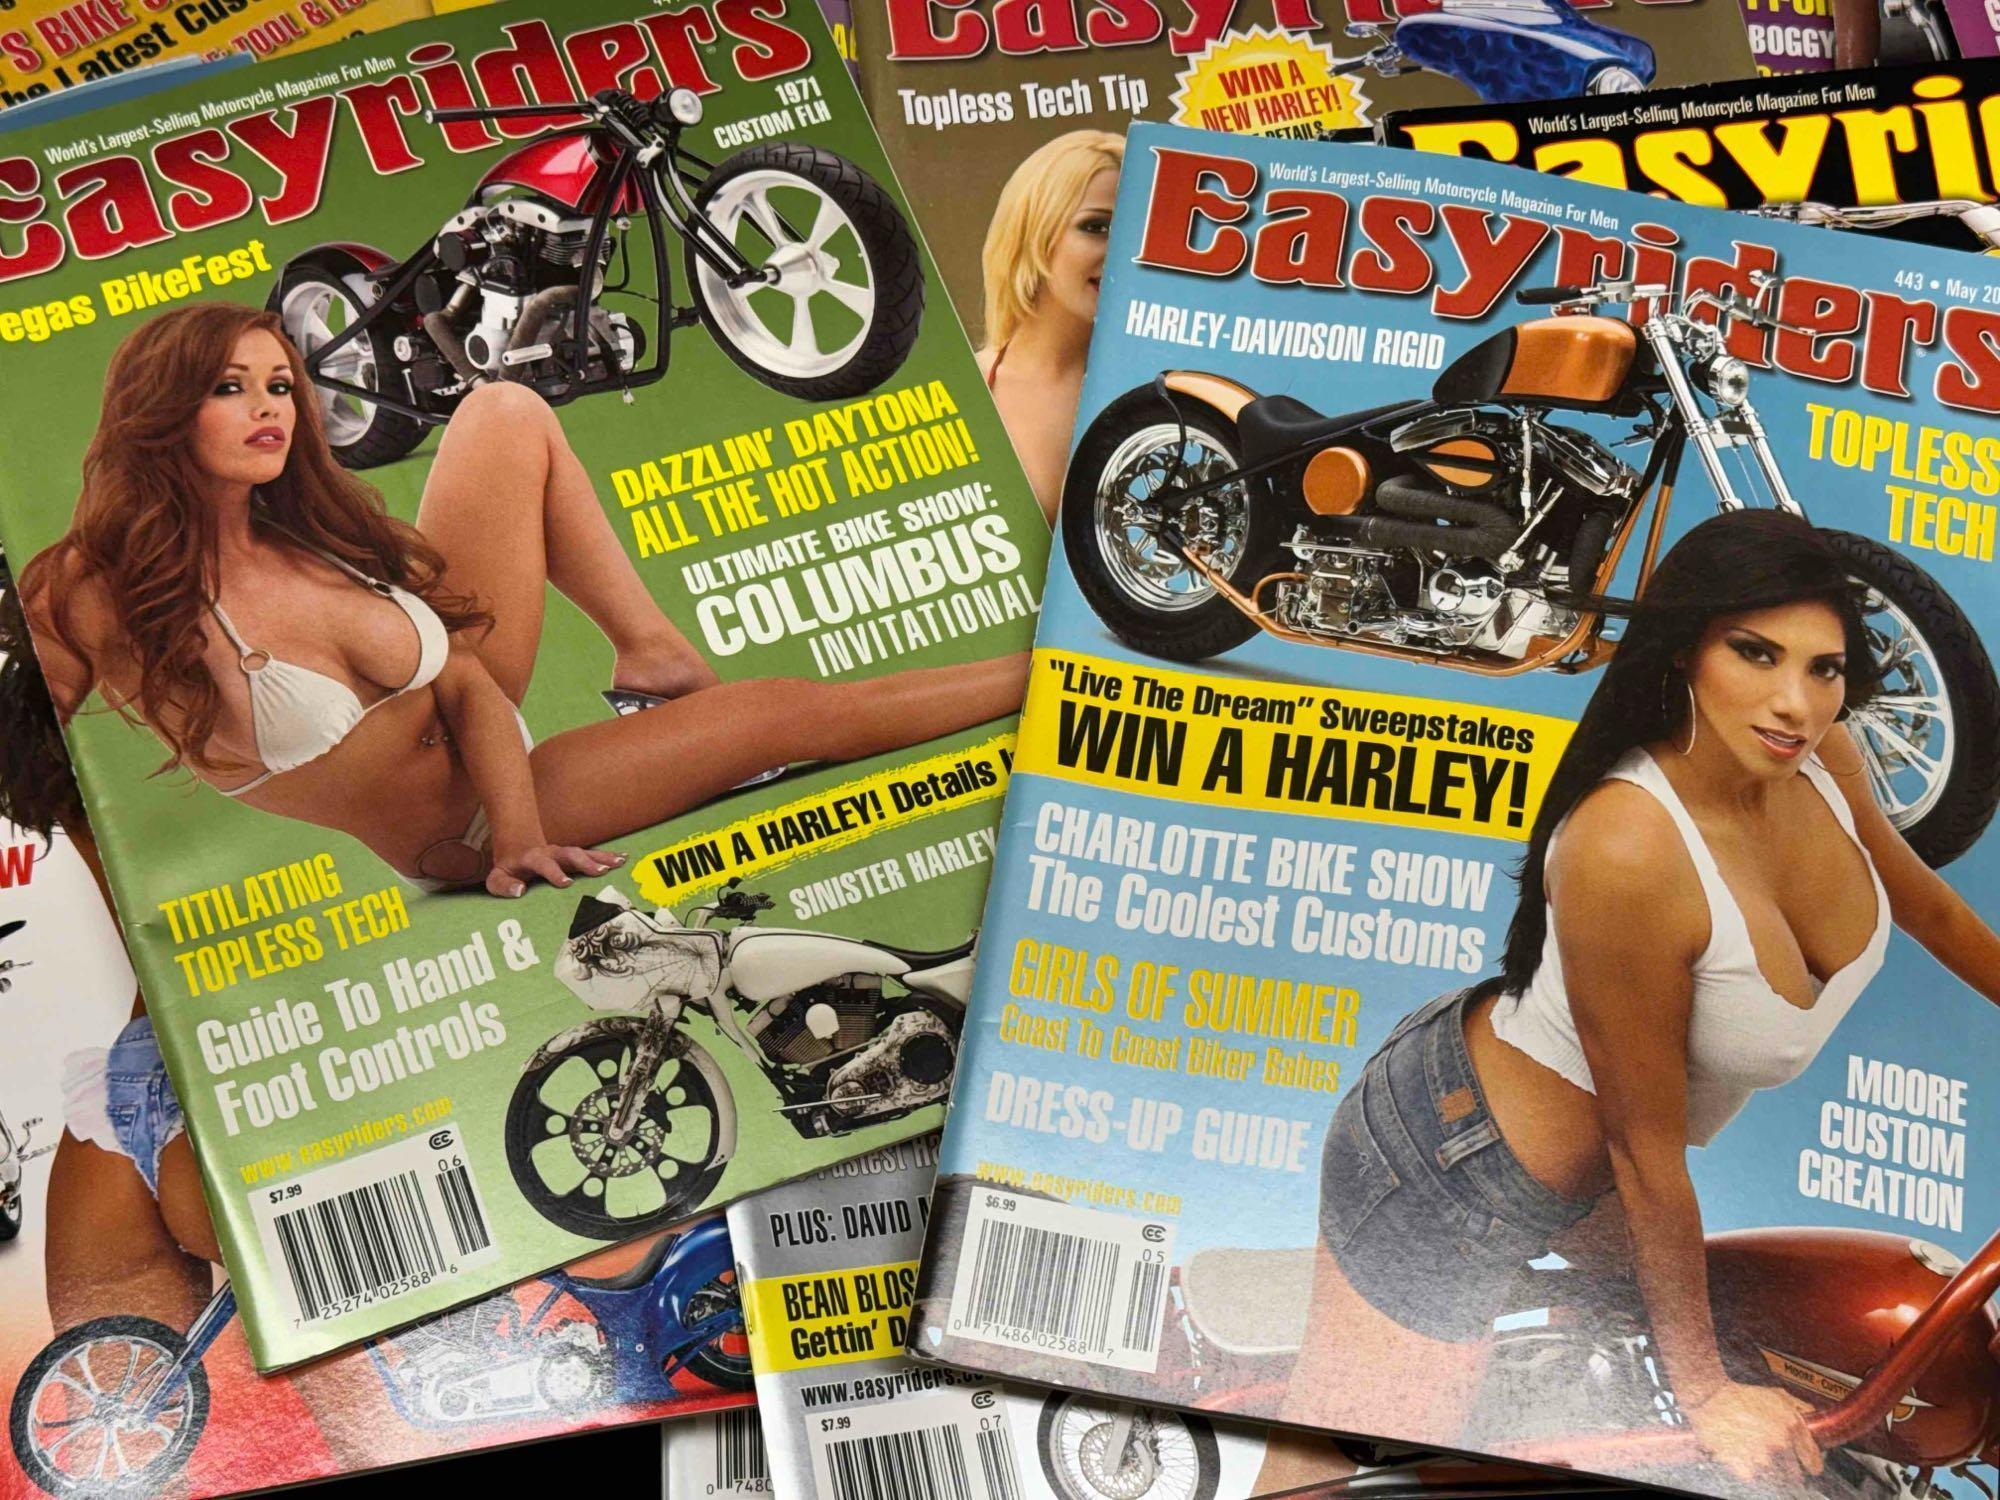 Approximately 40 Easyriders Motorcycle Magazines